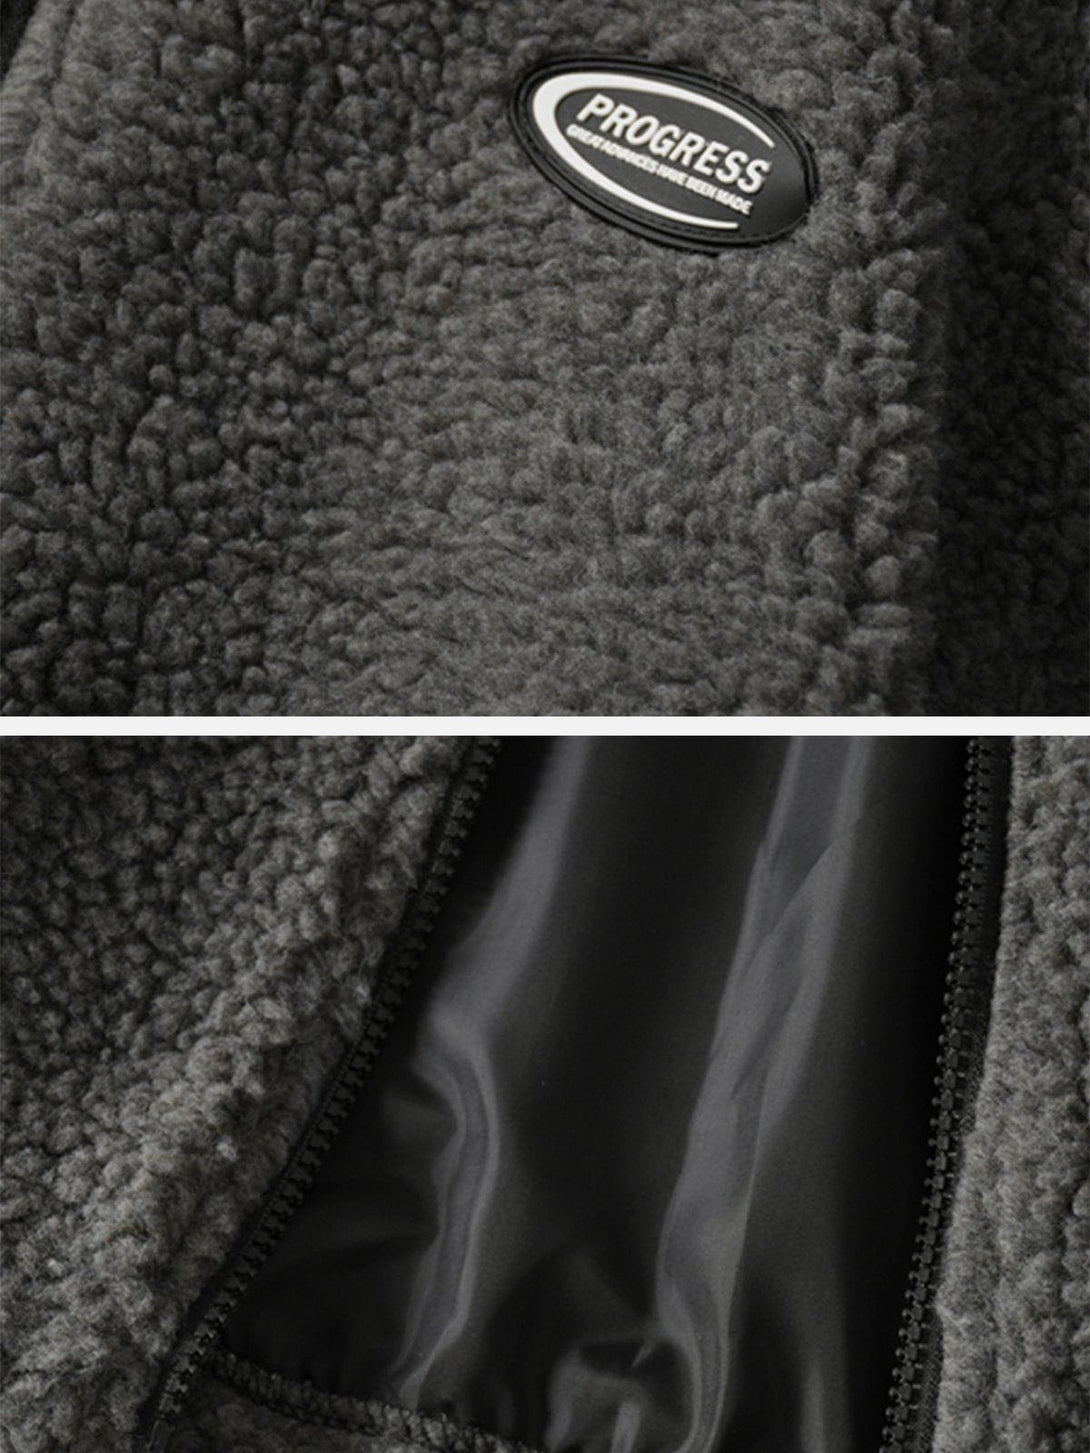 Majesda® - Labeled Lambskin Sherpa Coat outfit ideas, streetwear fashion - majesda.com